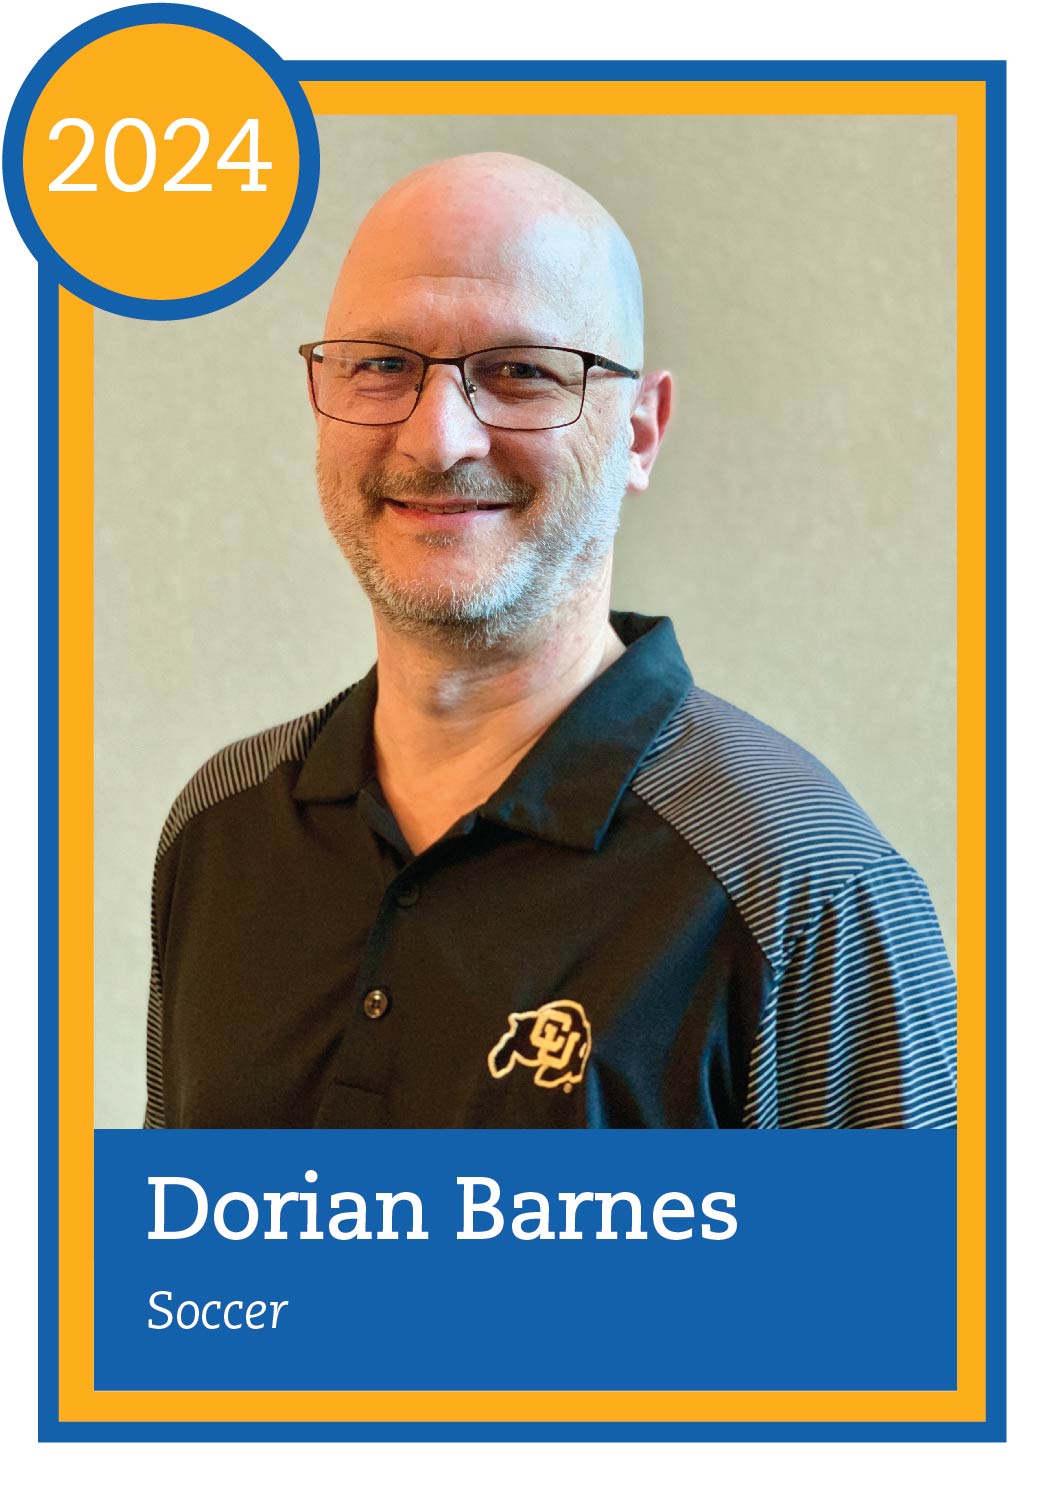 Baseball card design with headshot of Dorian Barnes and text "Dorian Barnes, soccer"